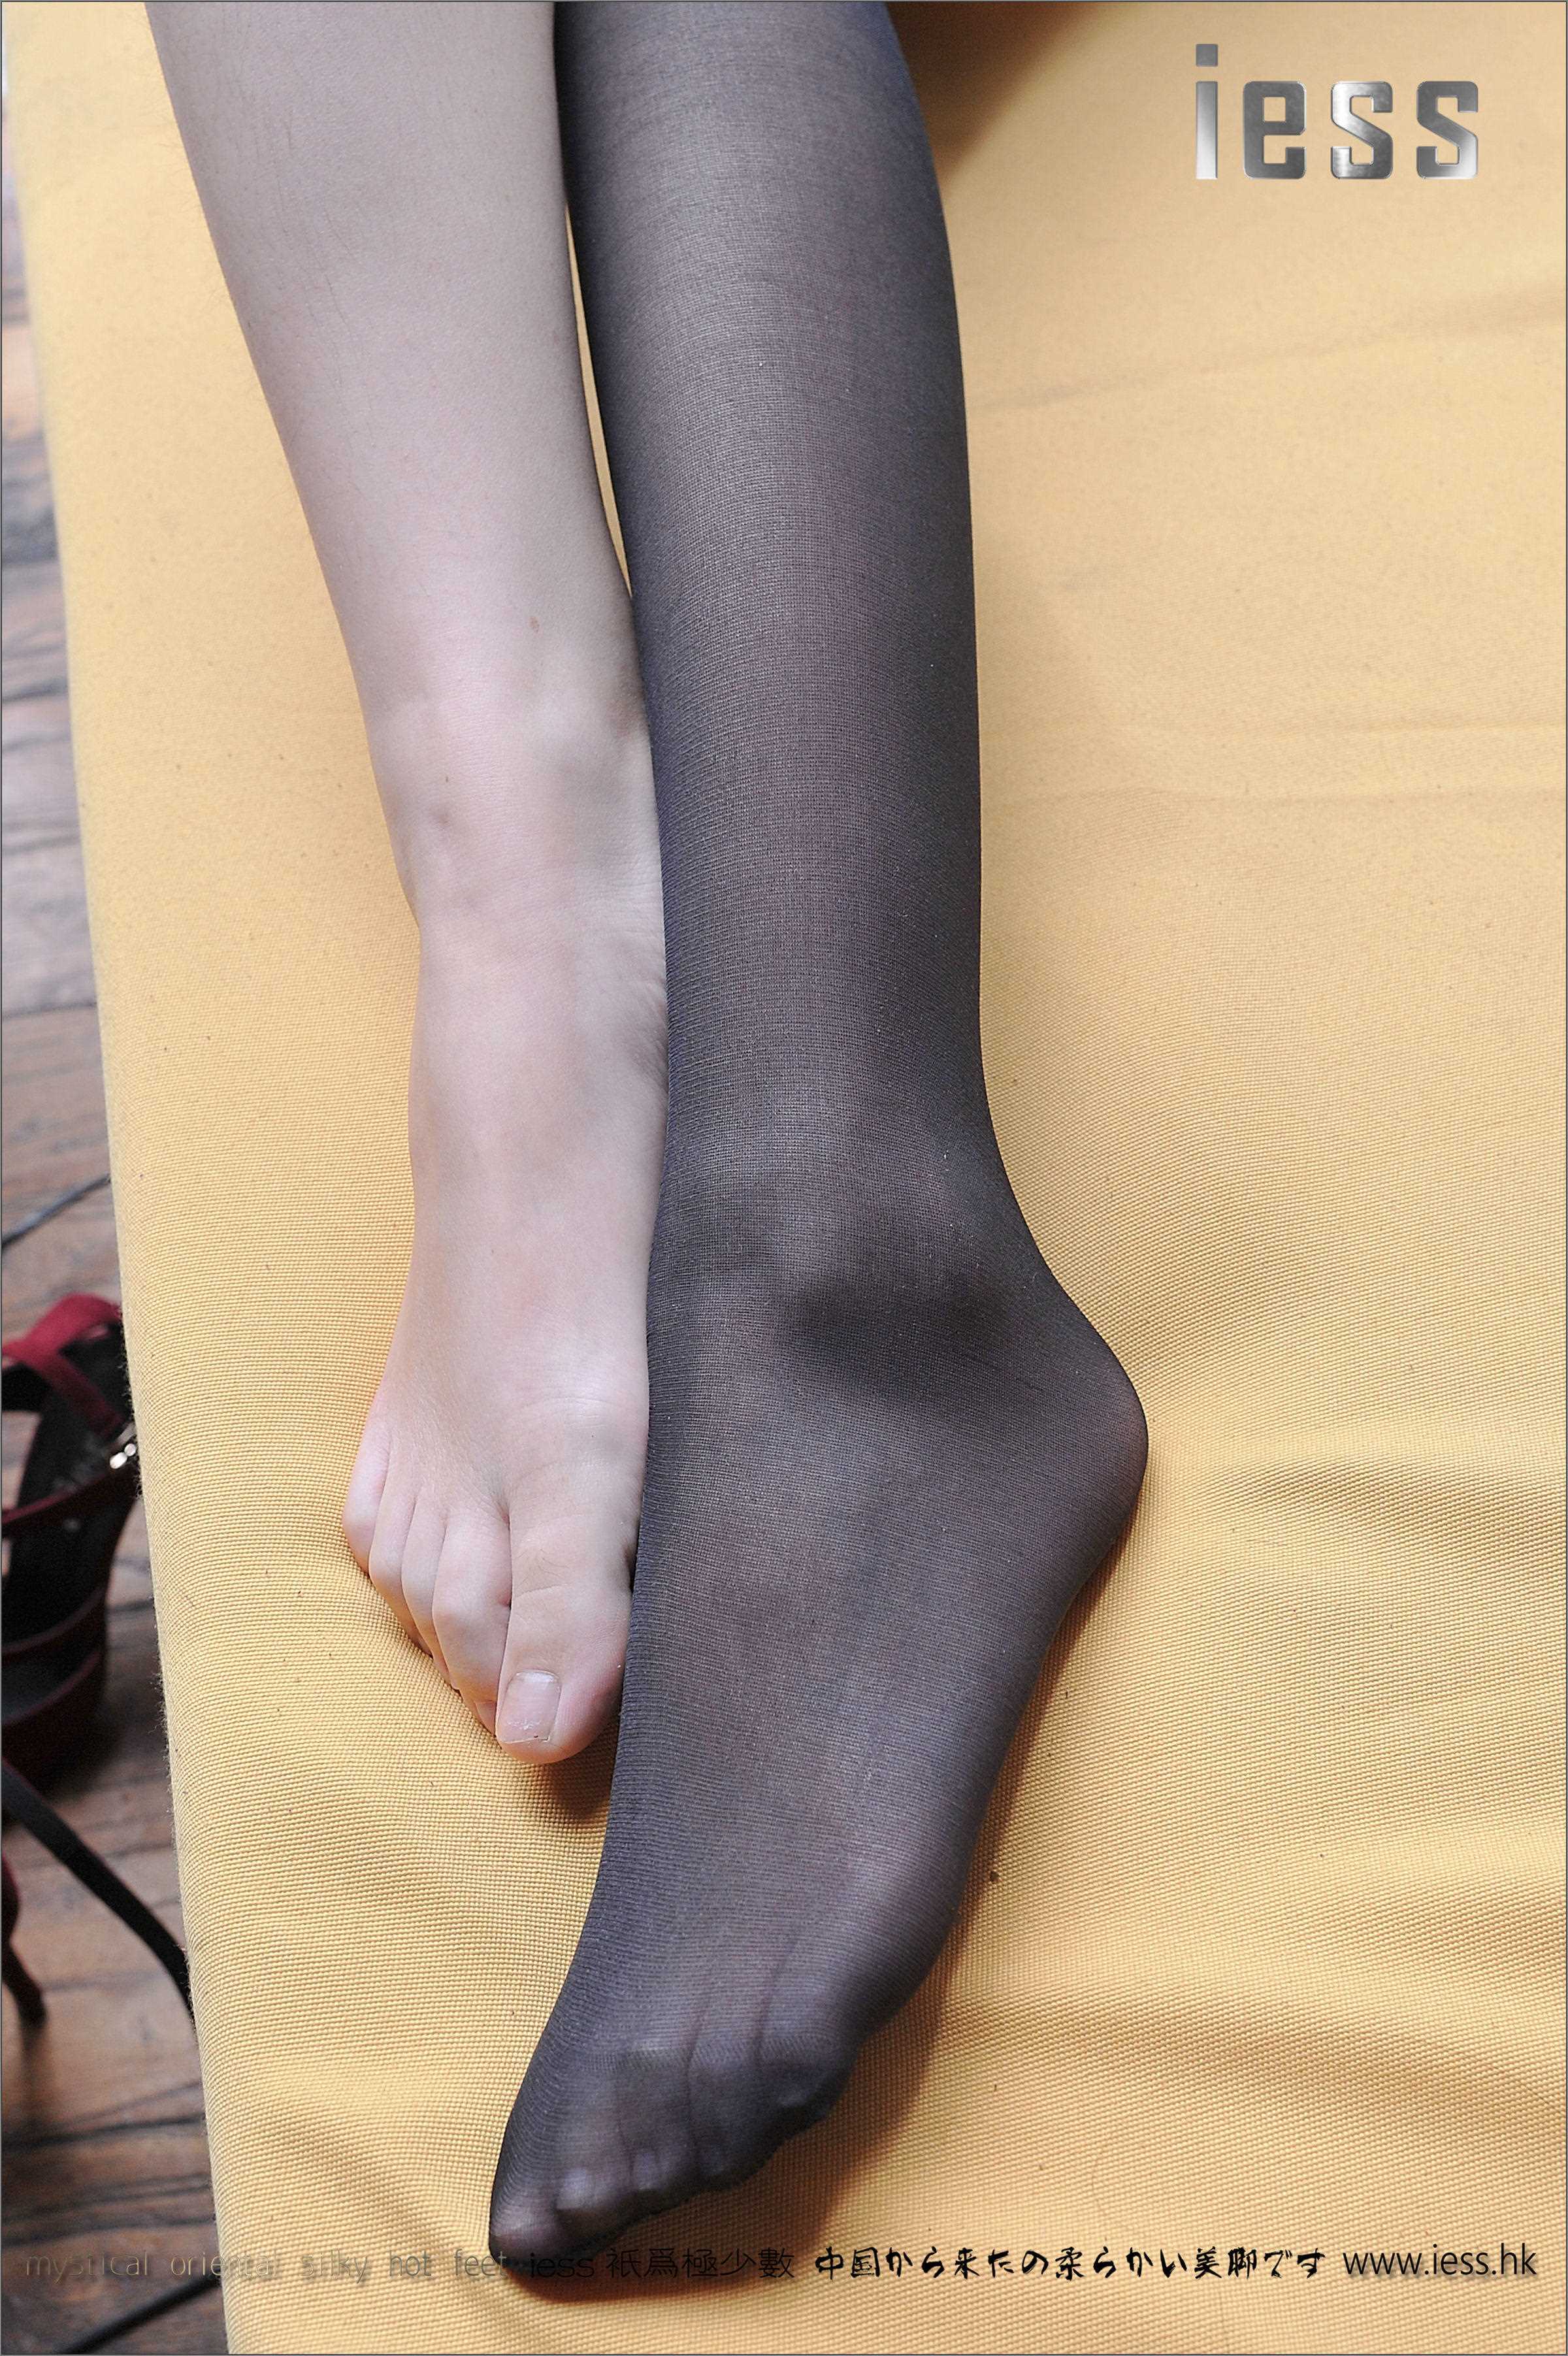 China Beauty Legs and feet 150